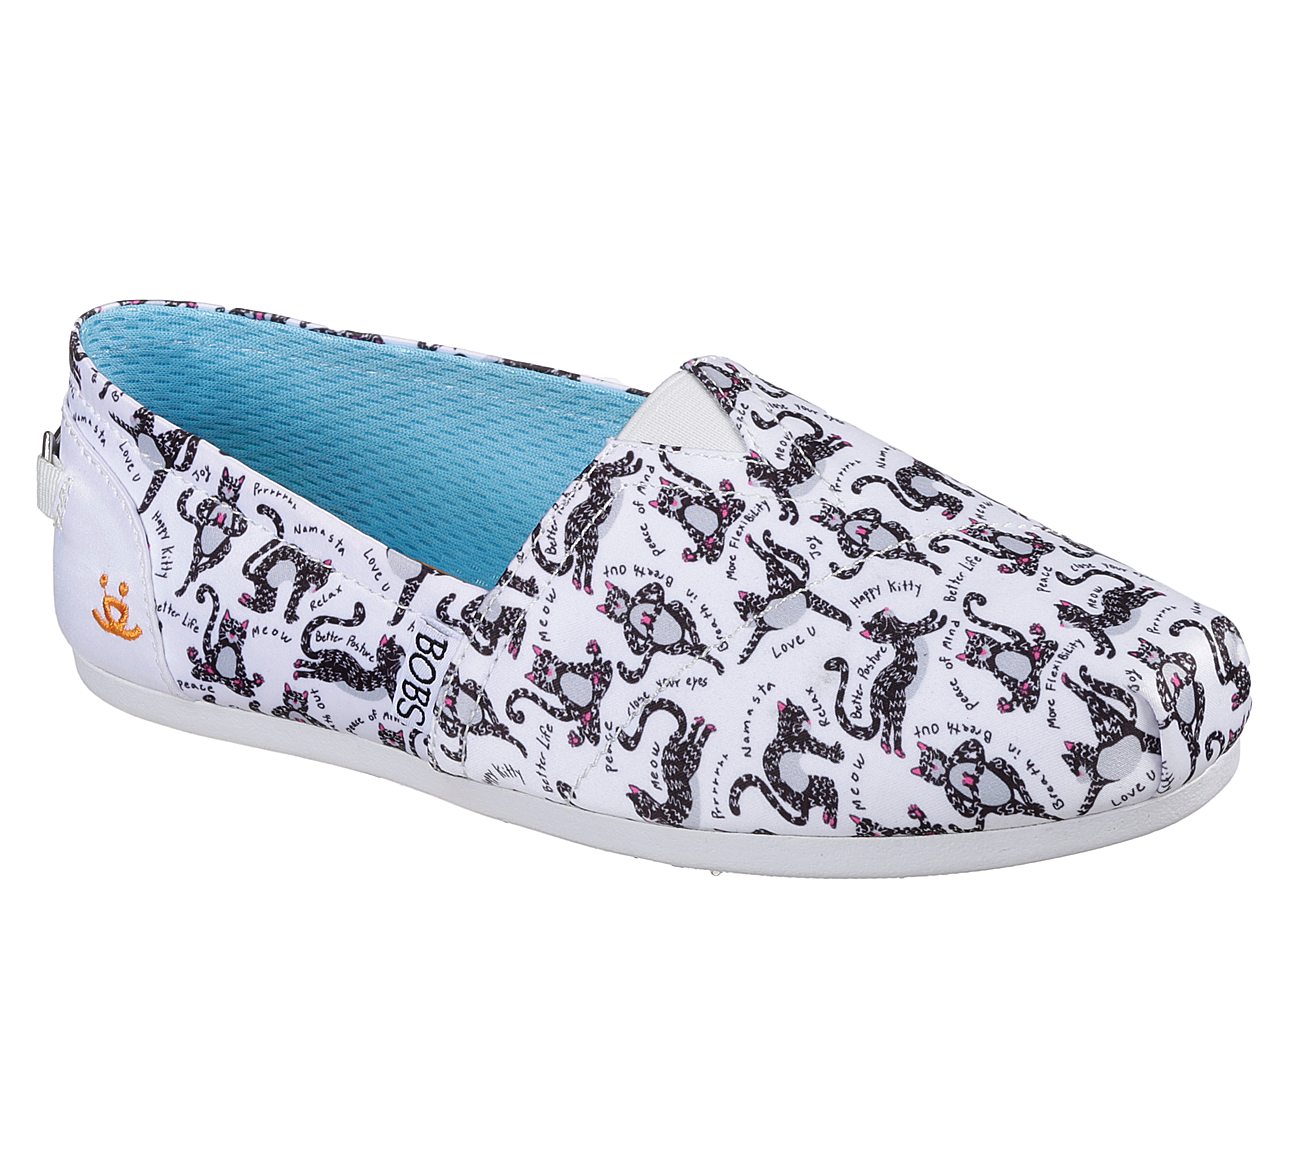 Buy SKECHERS BOBS Plush - Zen Kitty BOBS Shoes only $45.00